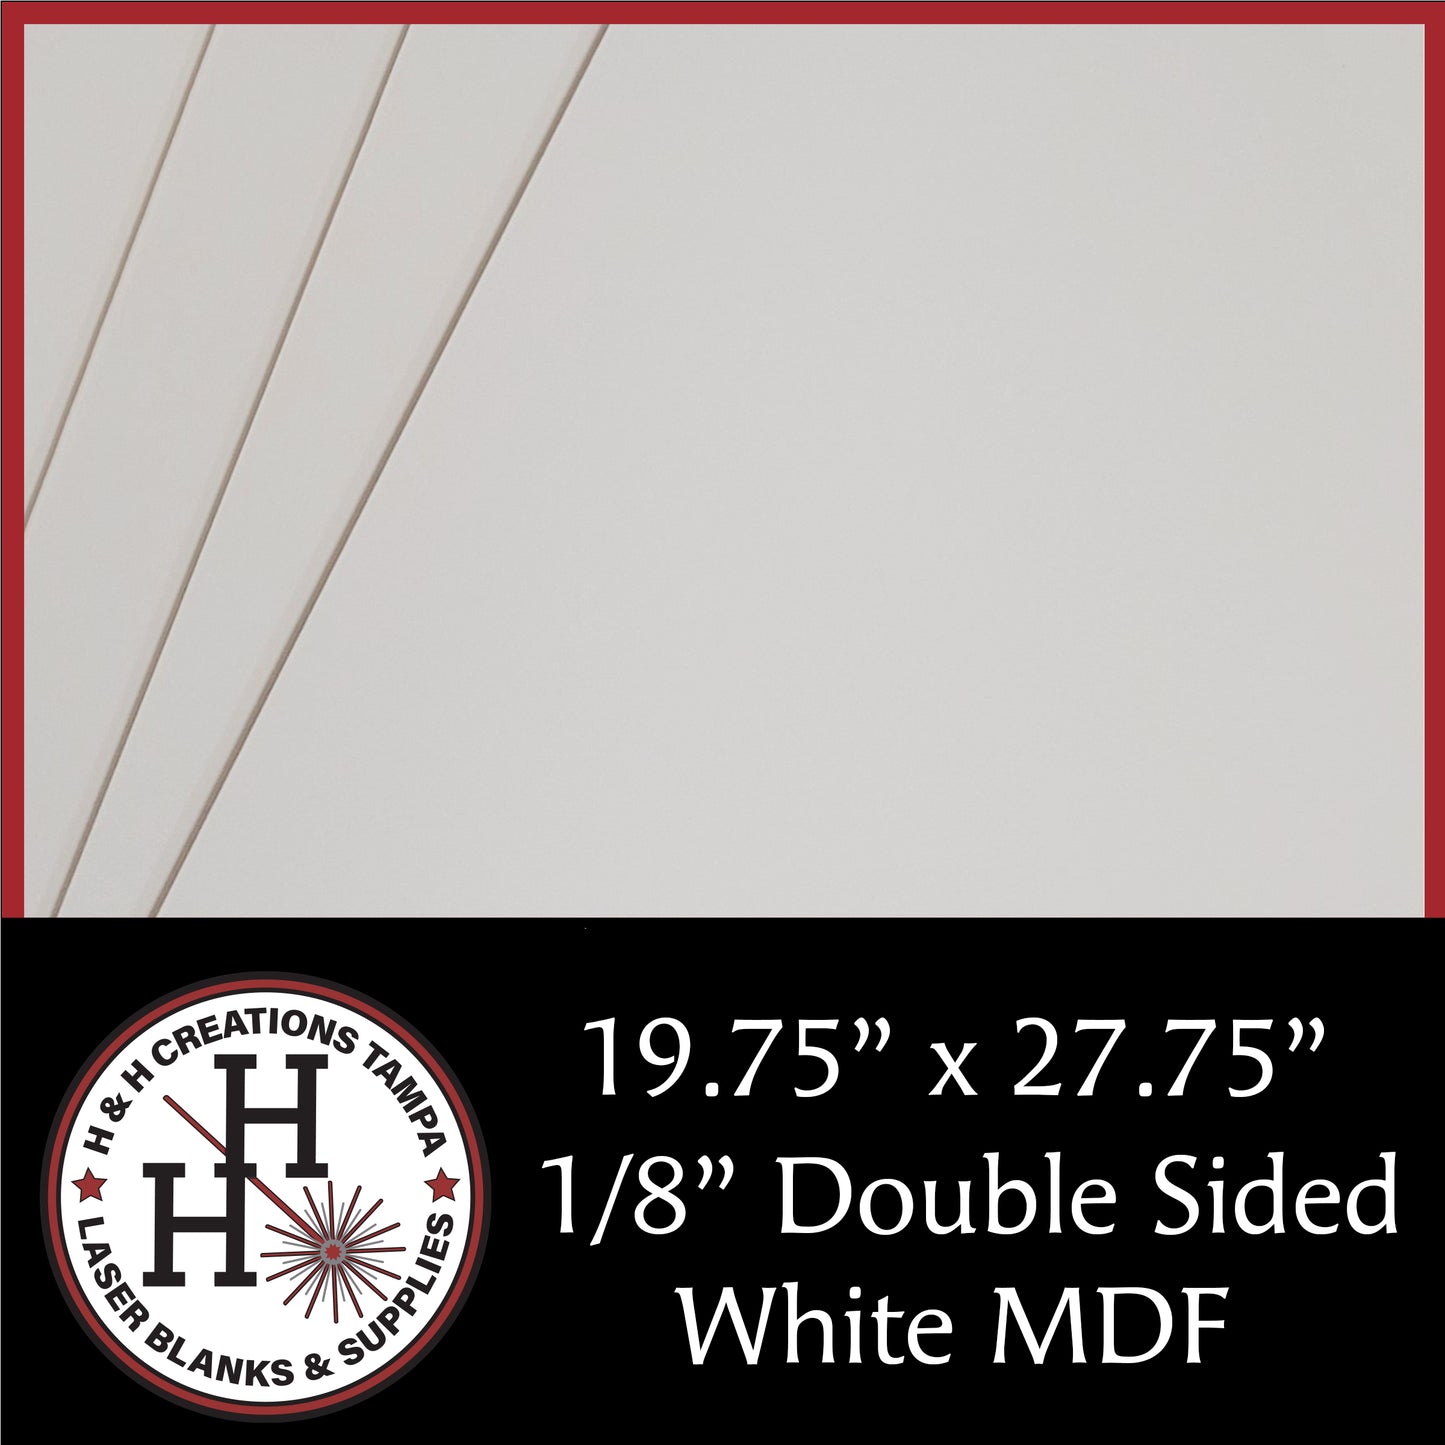 1/8" Premium Double-Sided White MDF/HDF Draft Board 19.75" x 27.75"